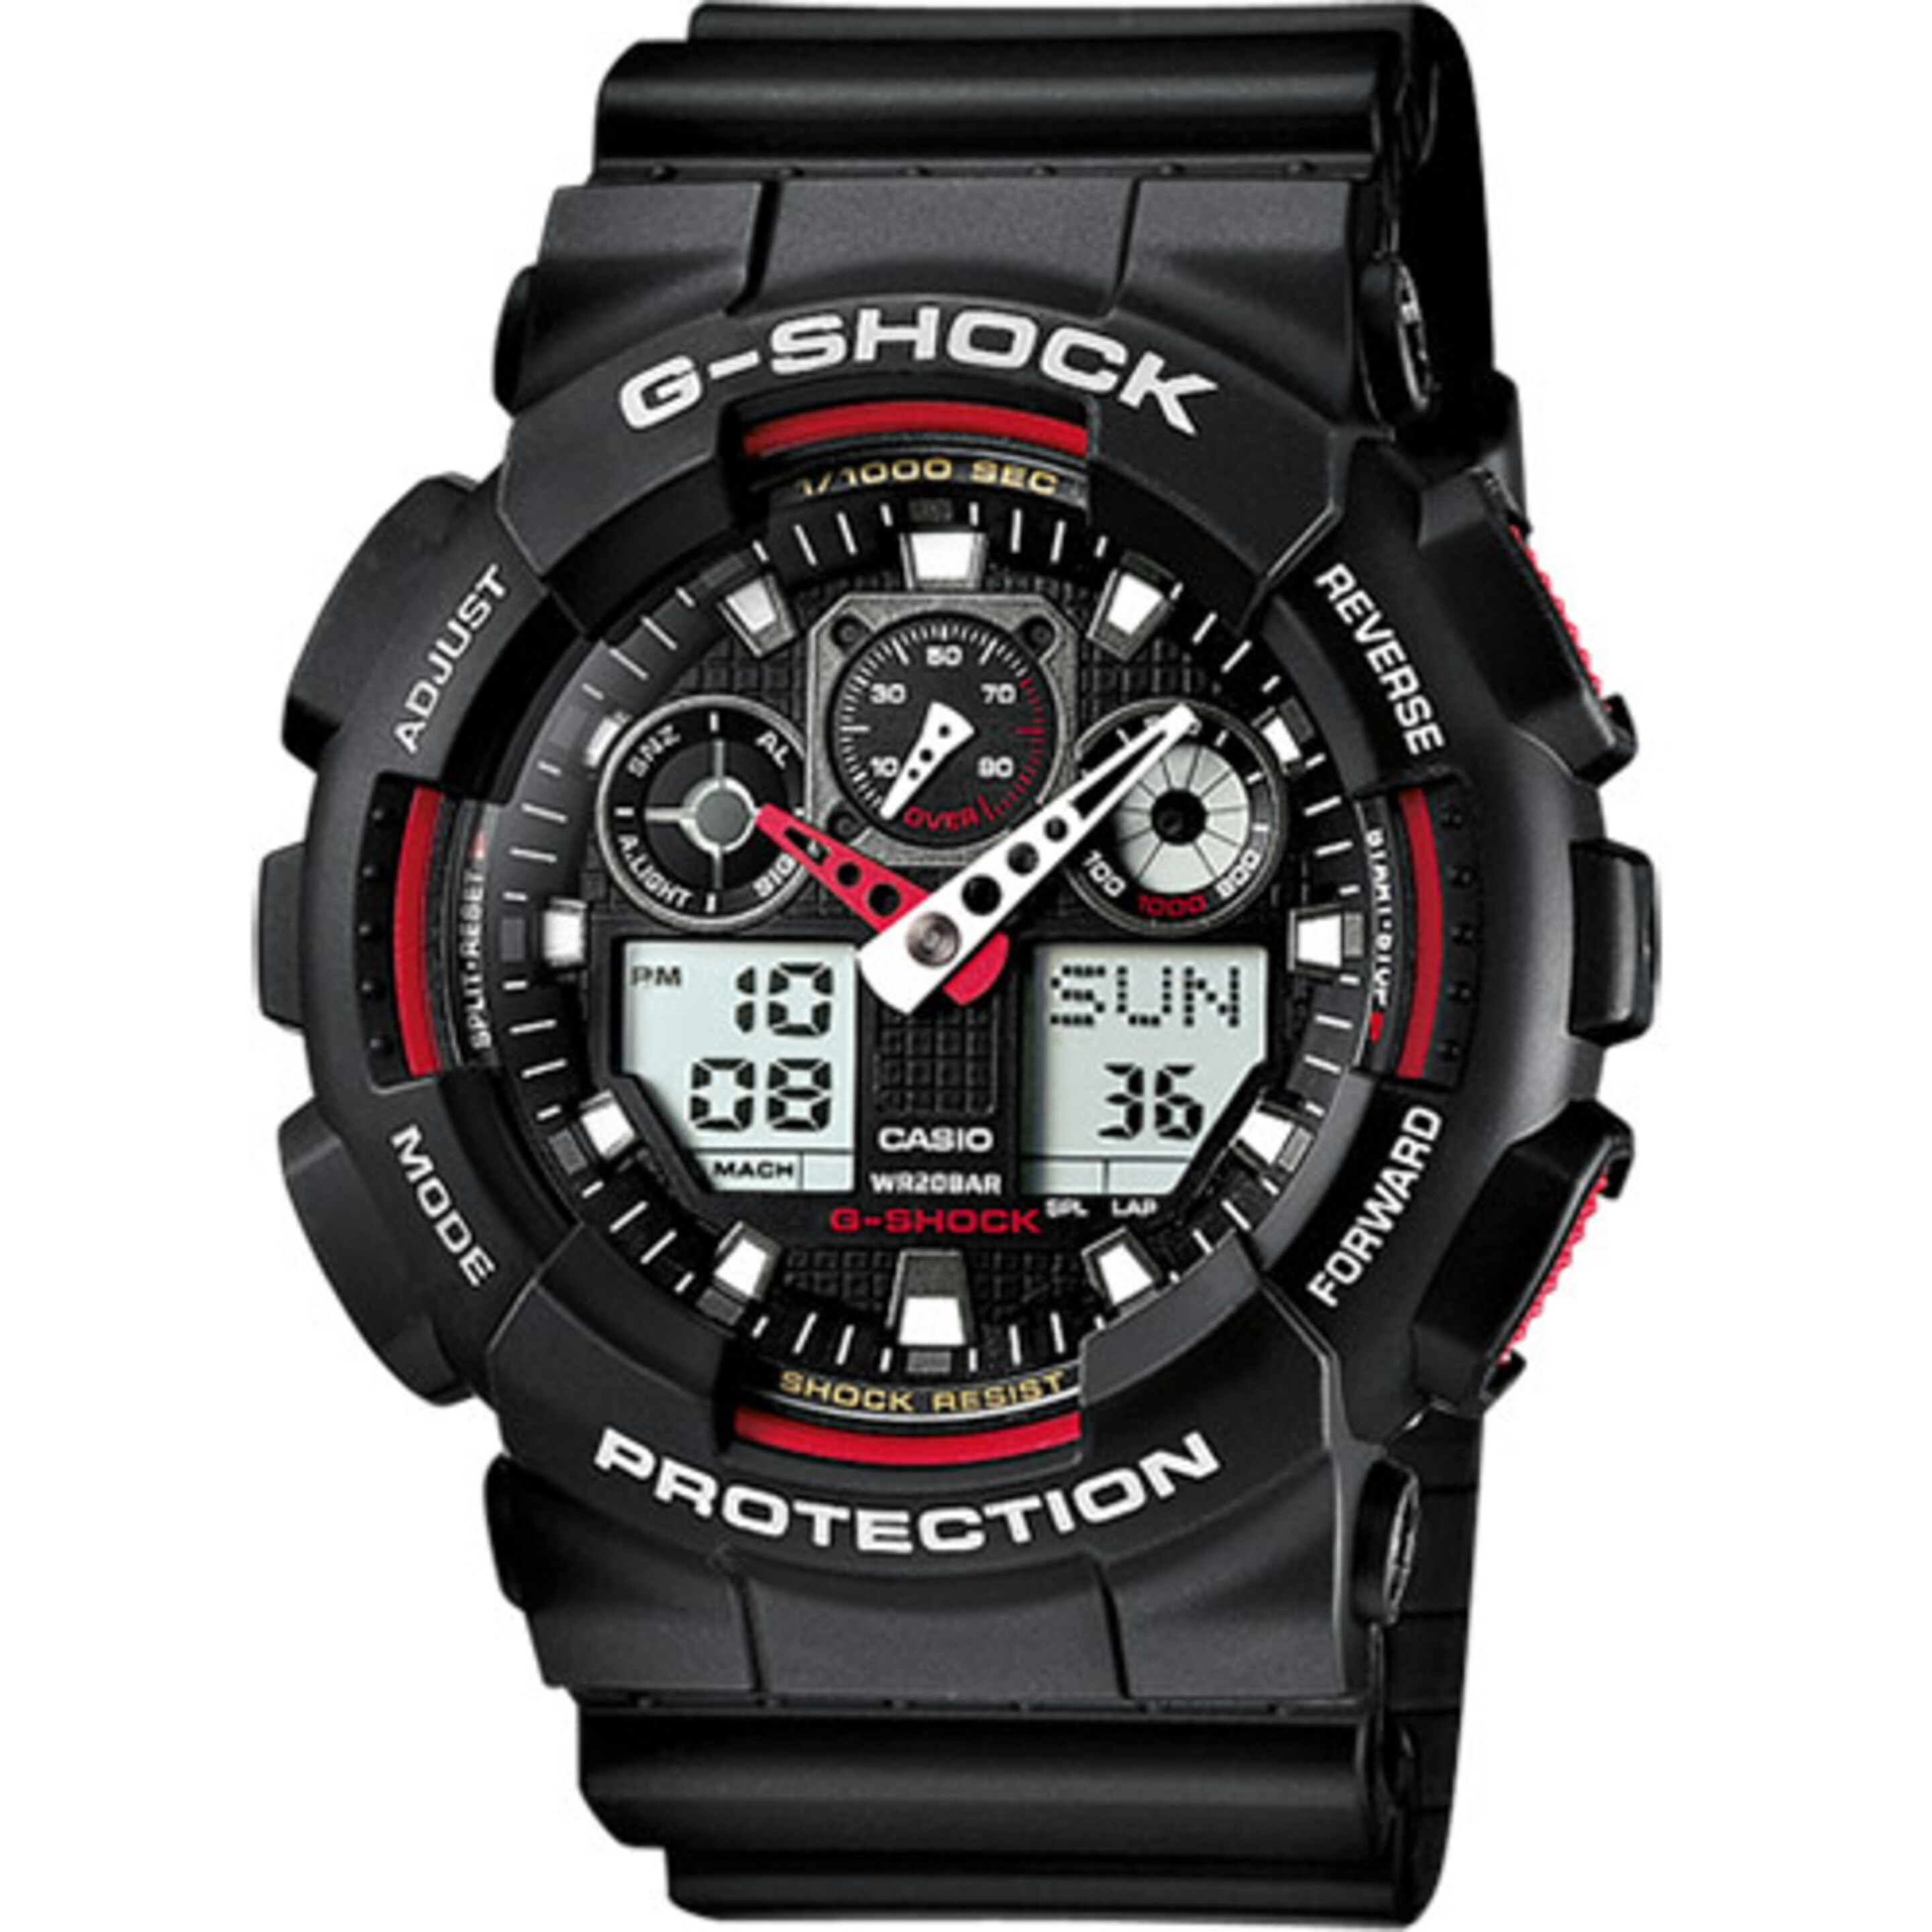 Reloj Casio G-shock Ga-100-1a4er - negro-rojo - 